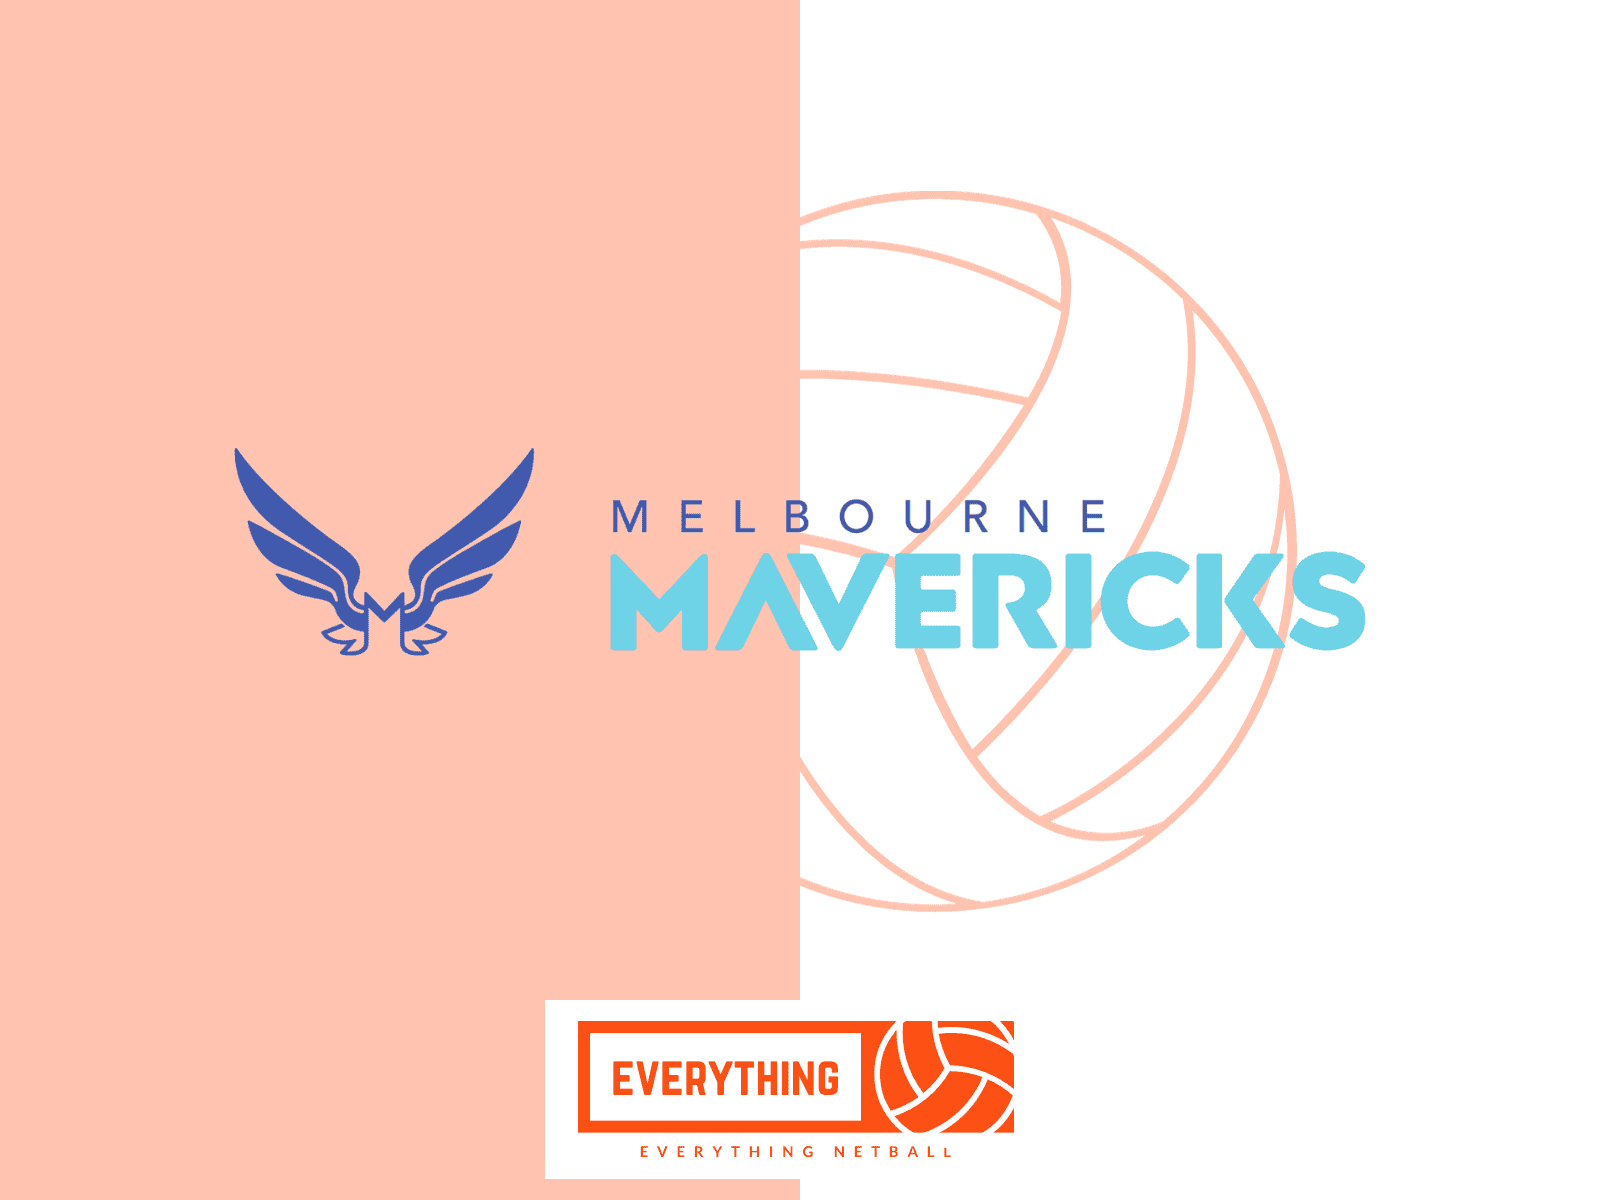 Melbourne Mavericks logo over the top of a split light orange and white background with a light orange netball icon